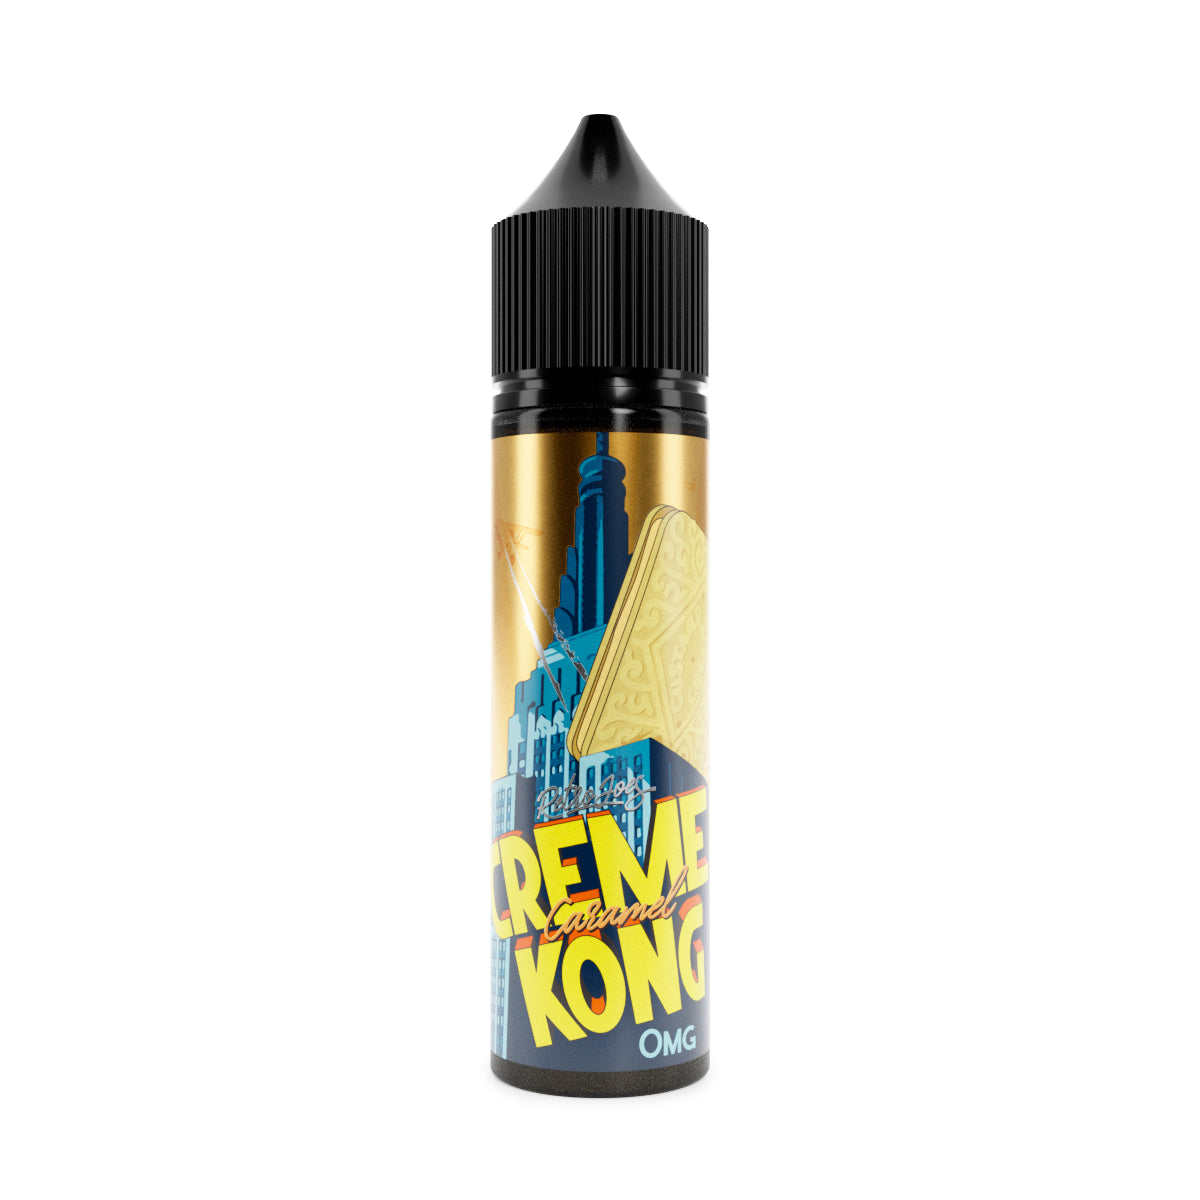 Retro Joes Creme Kong Caramel 0mg 50ml Short Fill E-Liquid